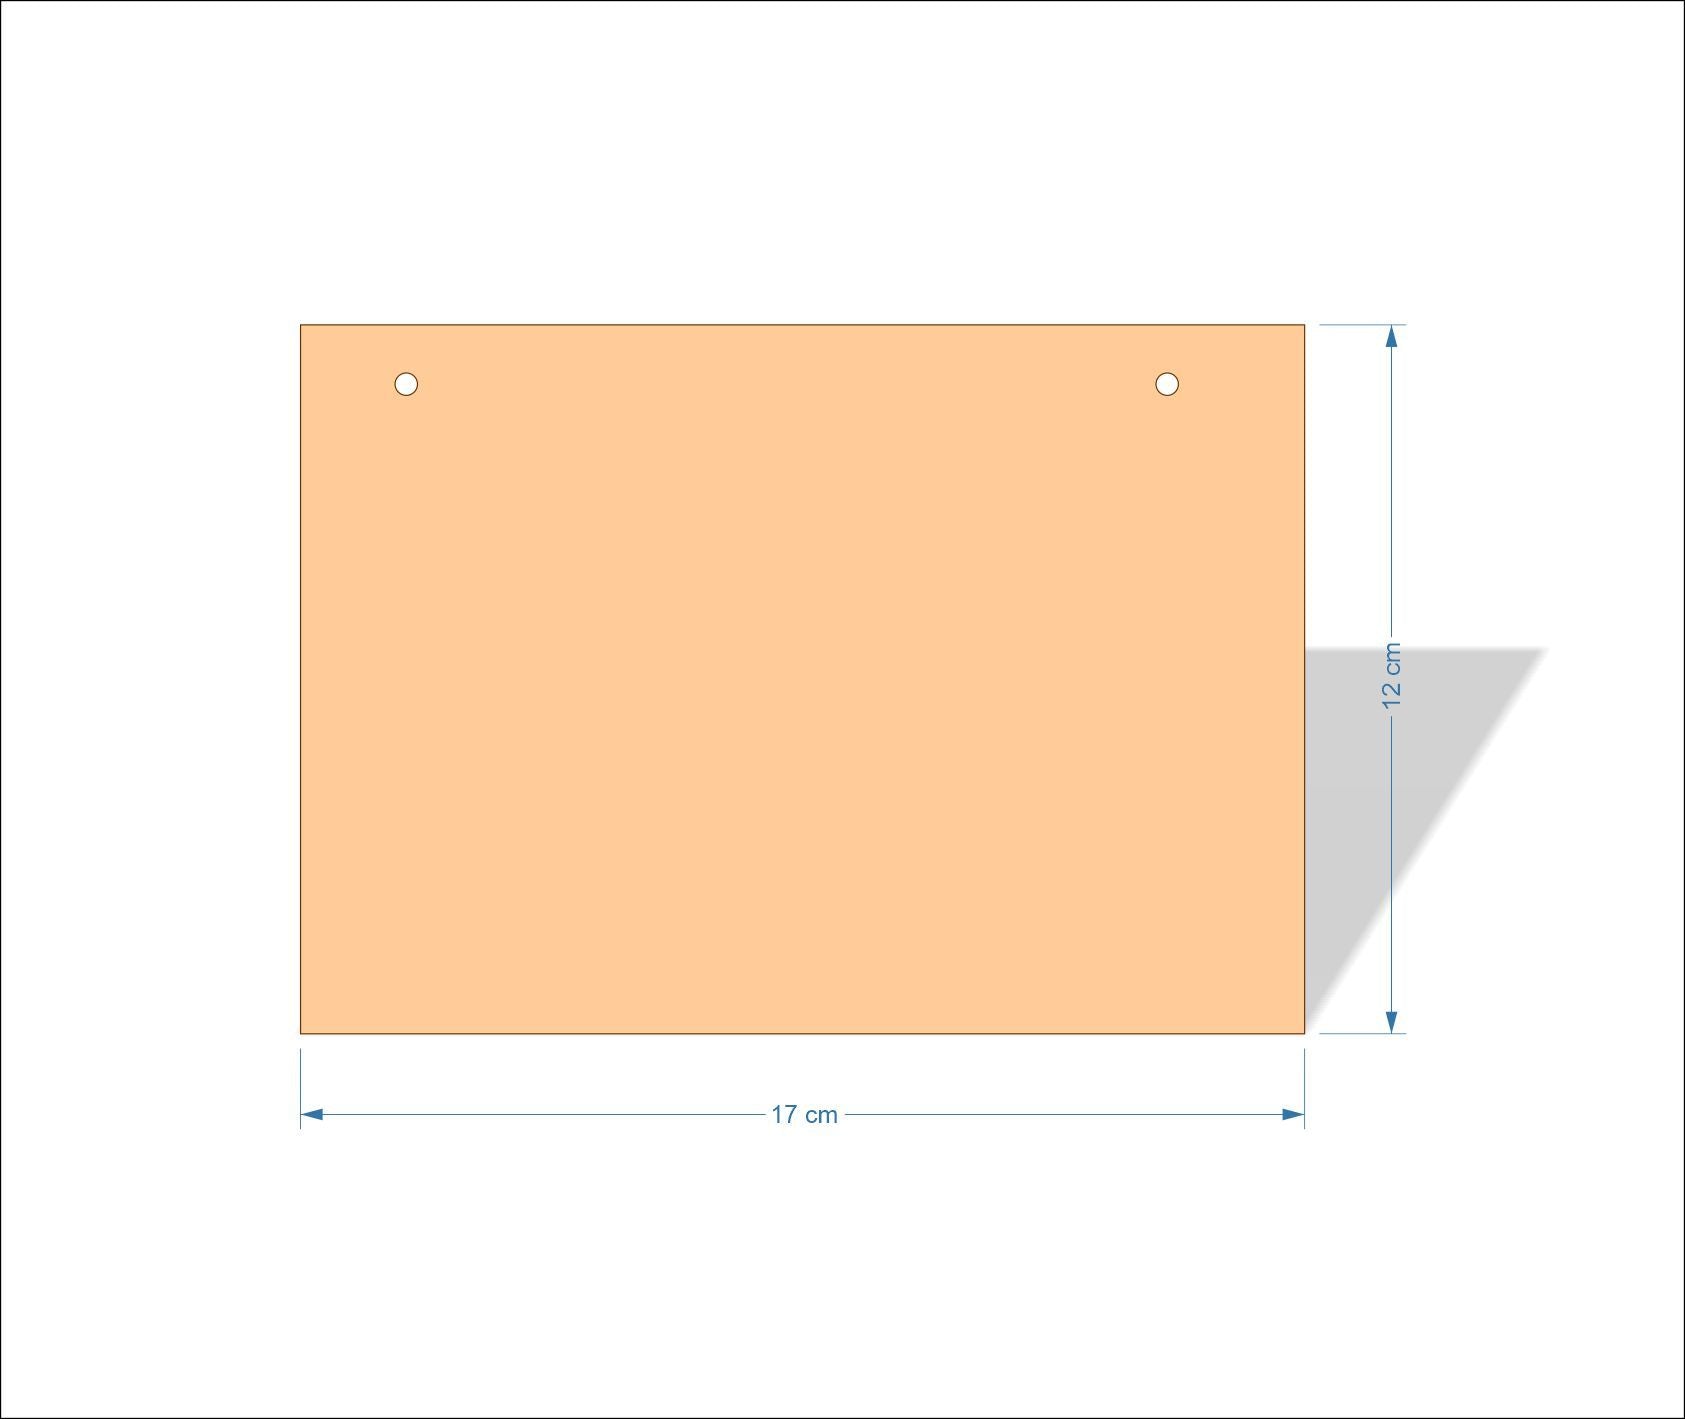 17 cm X 12 cm 3mm MDF Plaques with square corners